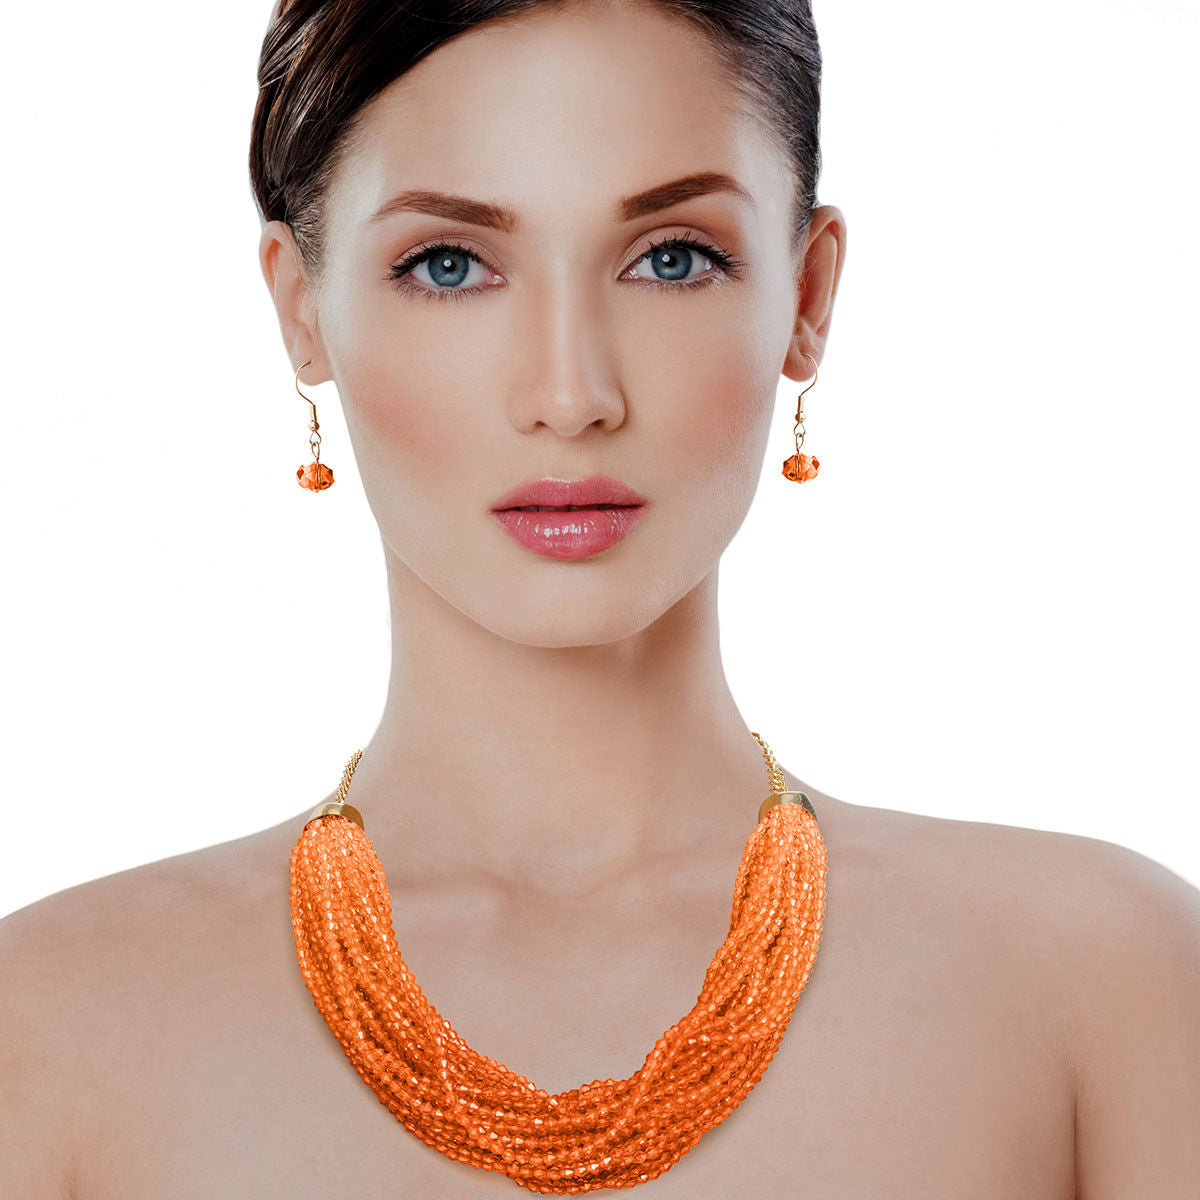 34 Strand Orange Bead Necklace